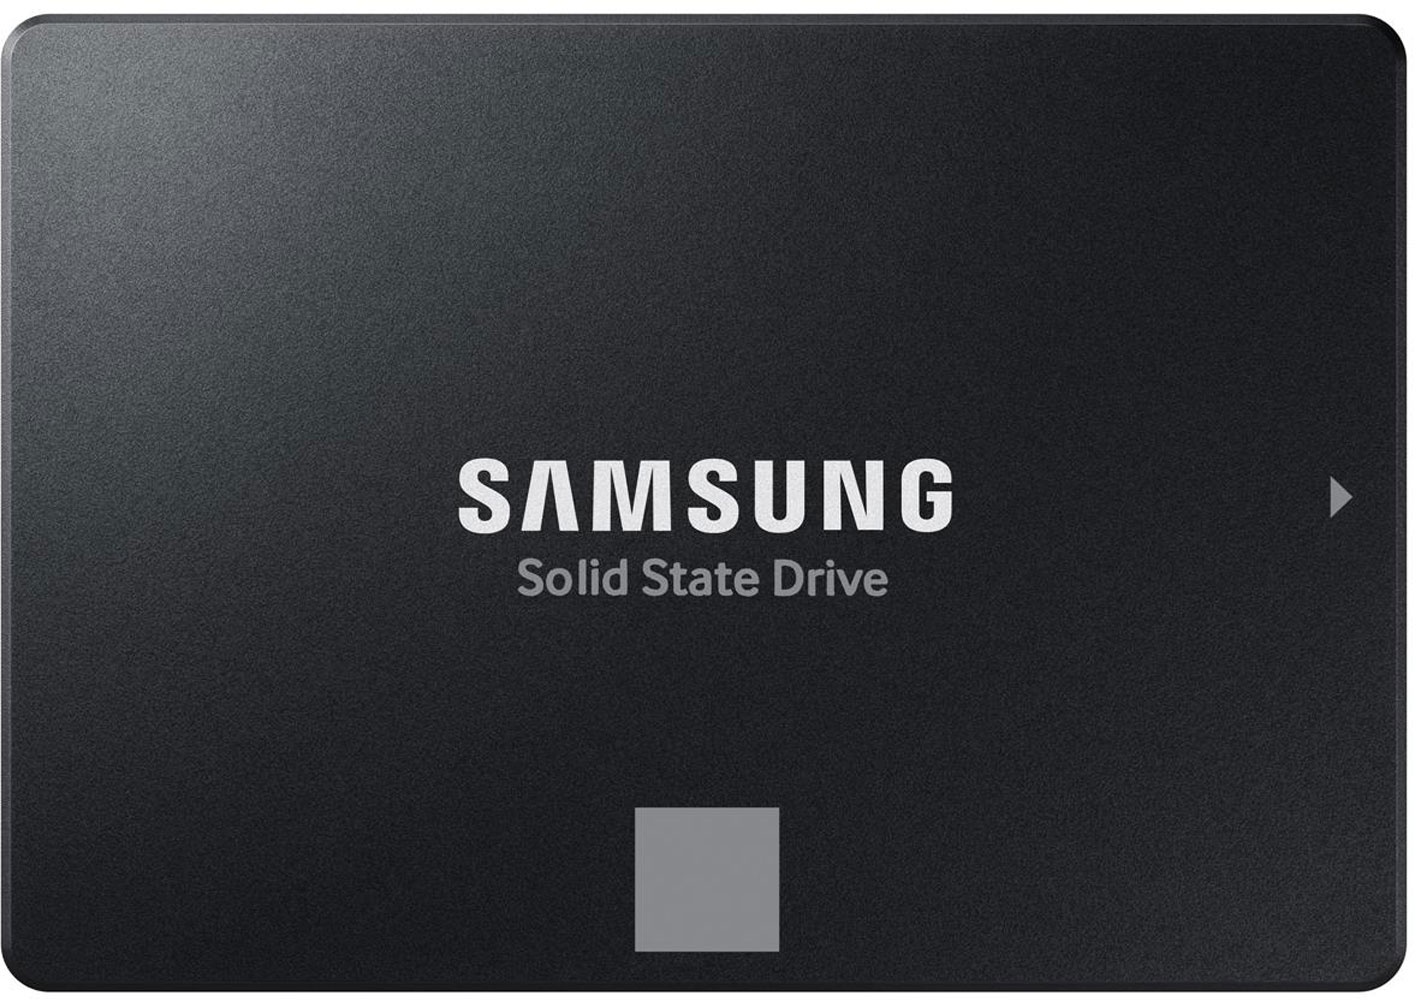 Samsung 860 EVO 500GB (MZ-76E500B/EU)